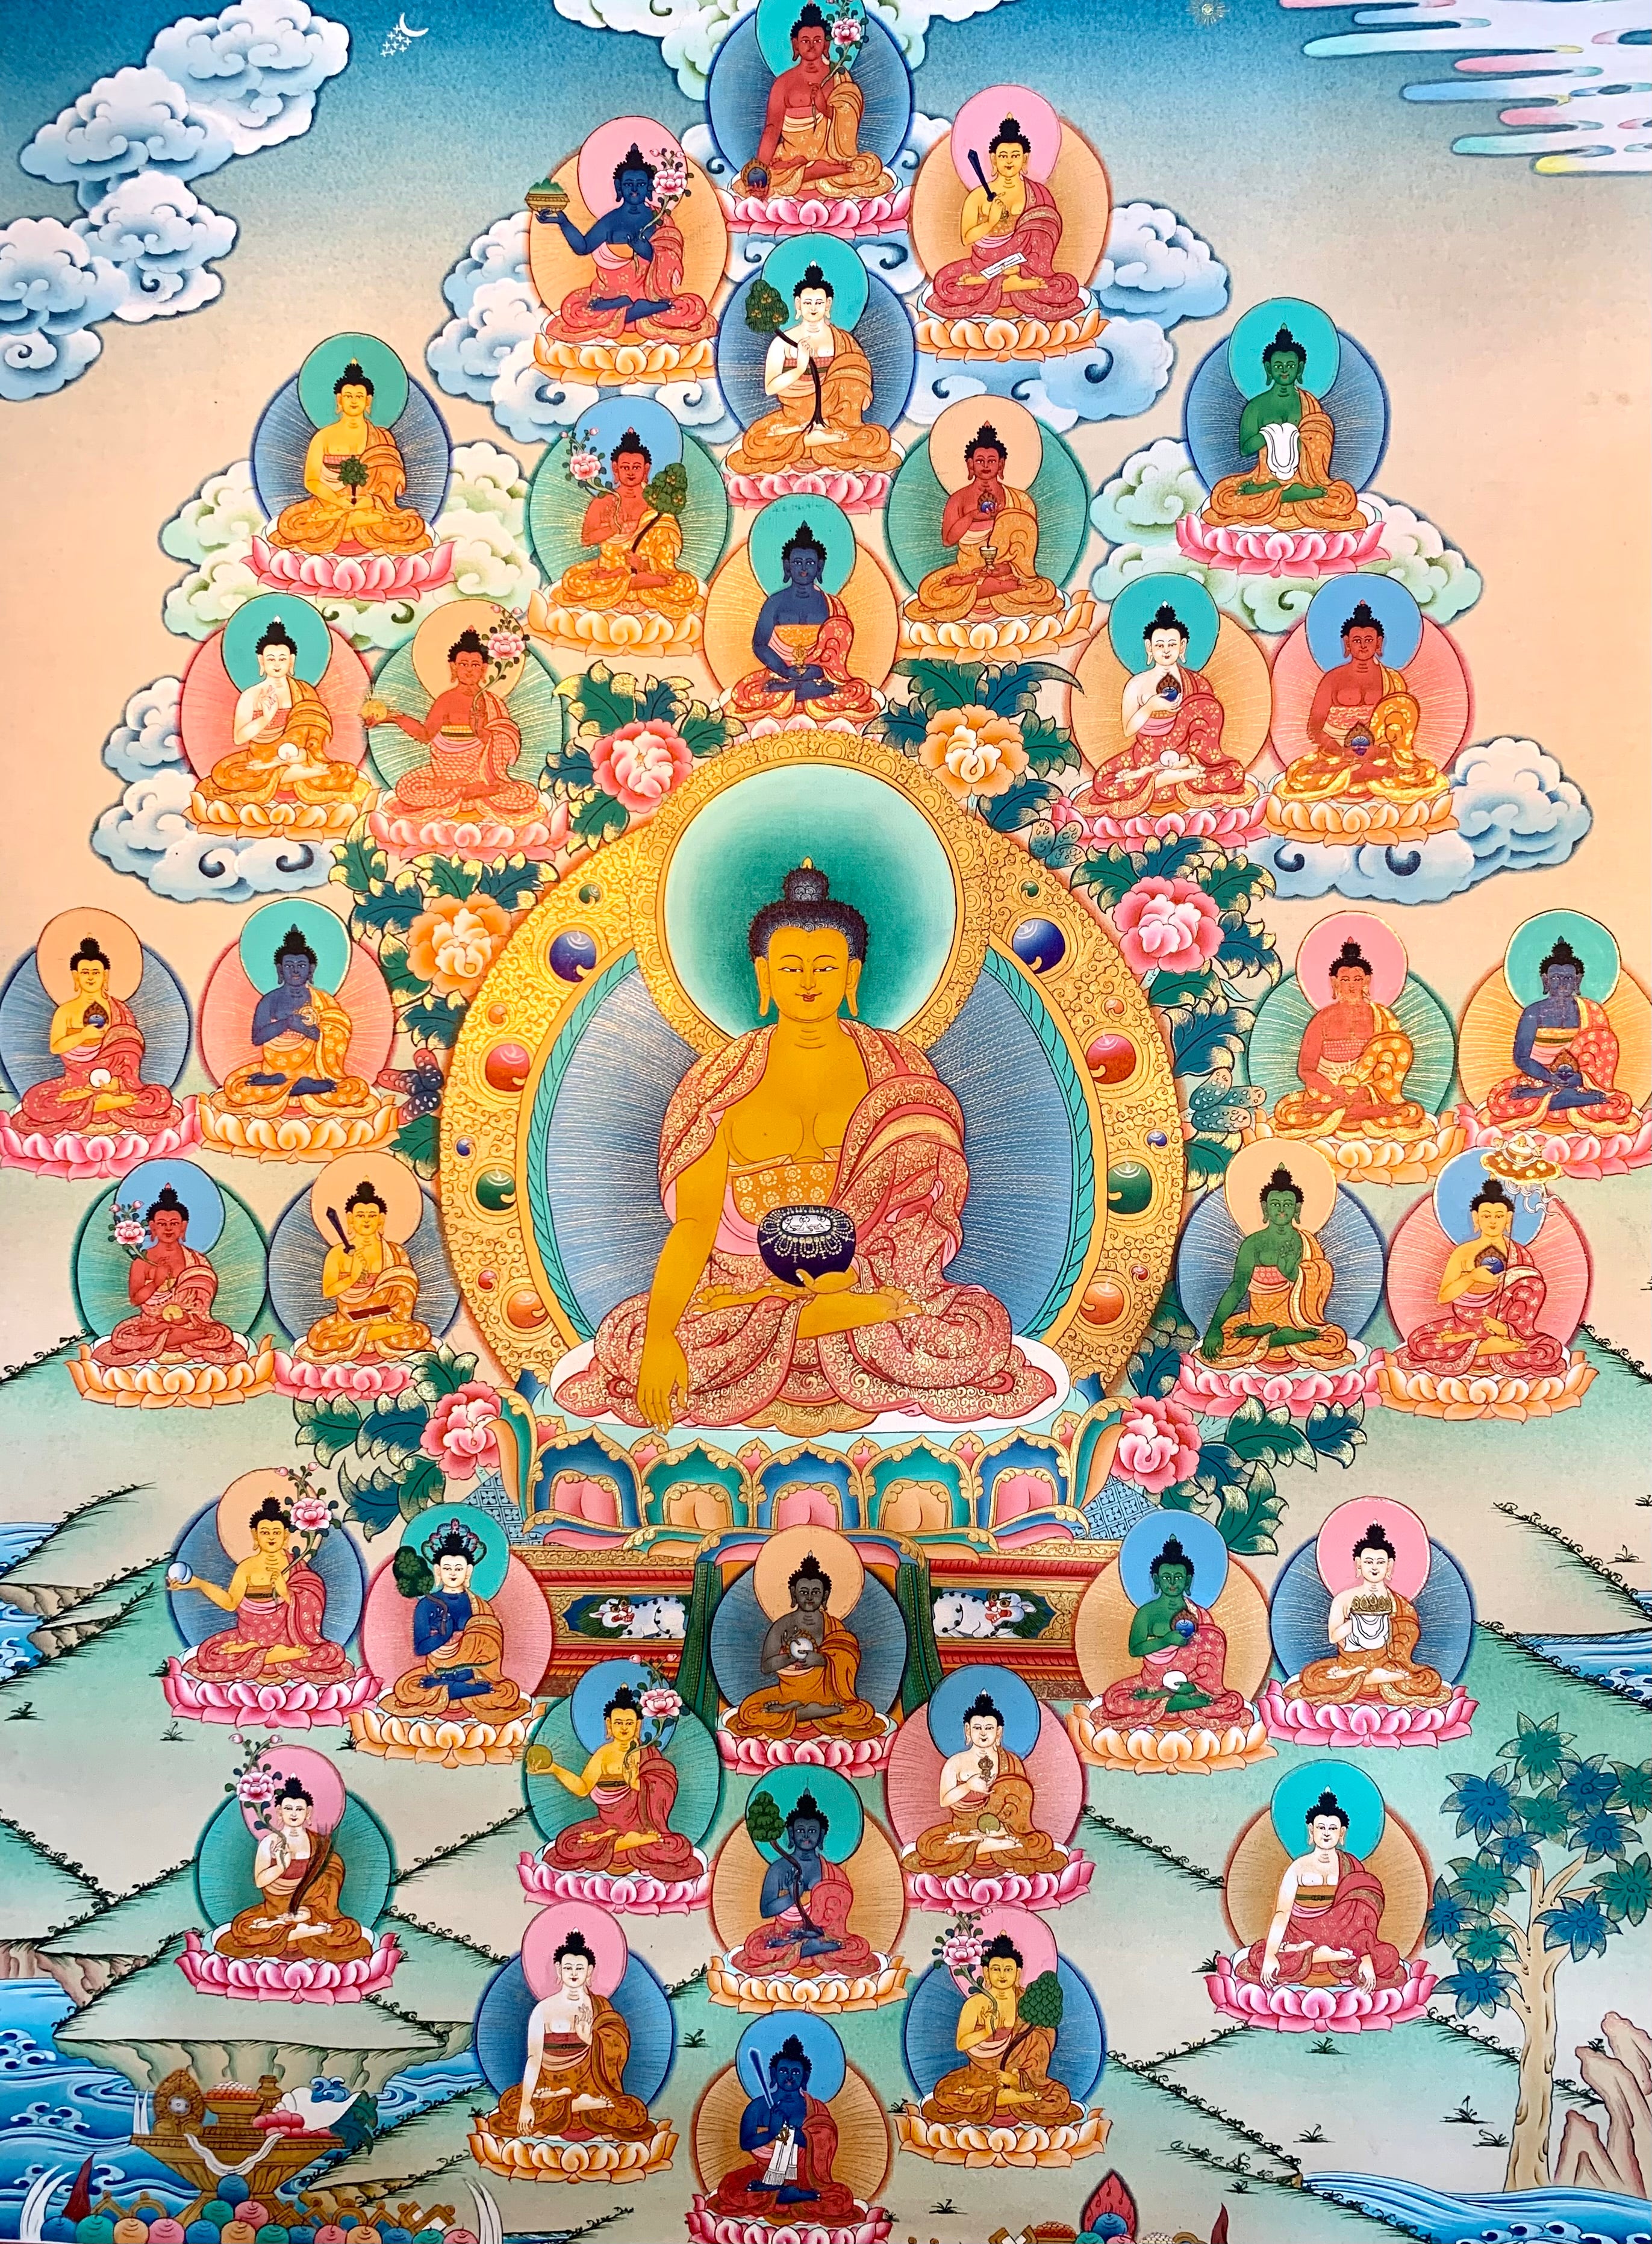 Shakyamuni Buddha and the Thirty-Five Buddhas of Confession Thangka Painting 70*50